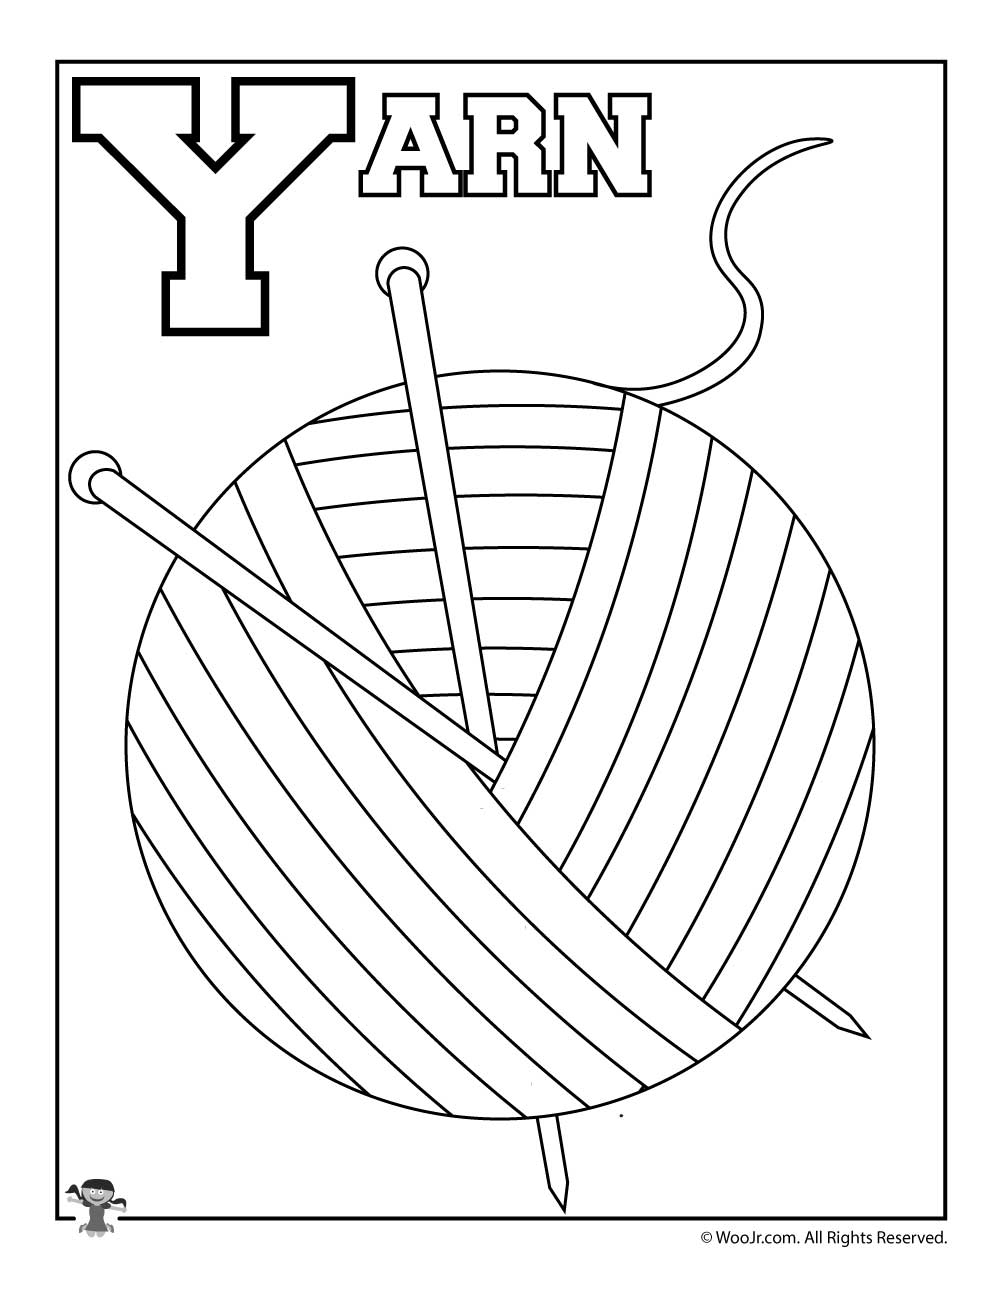 Y is for Yarn Coloring Page | Woo! Jr. Kids Activities